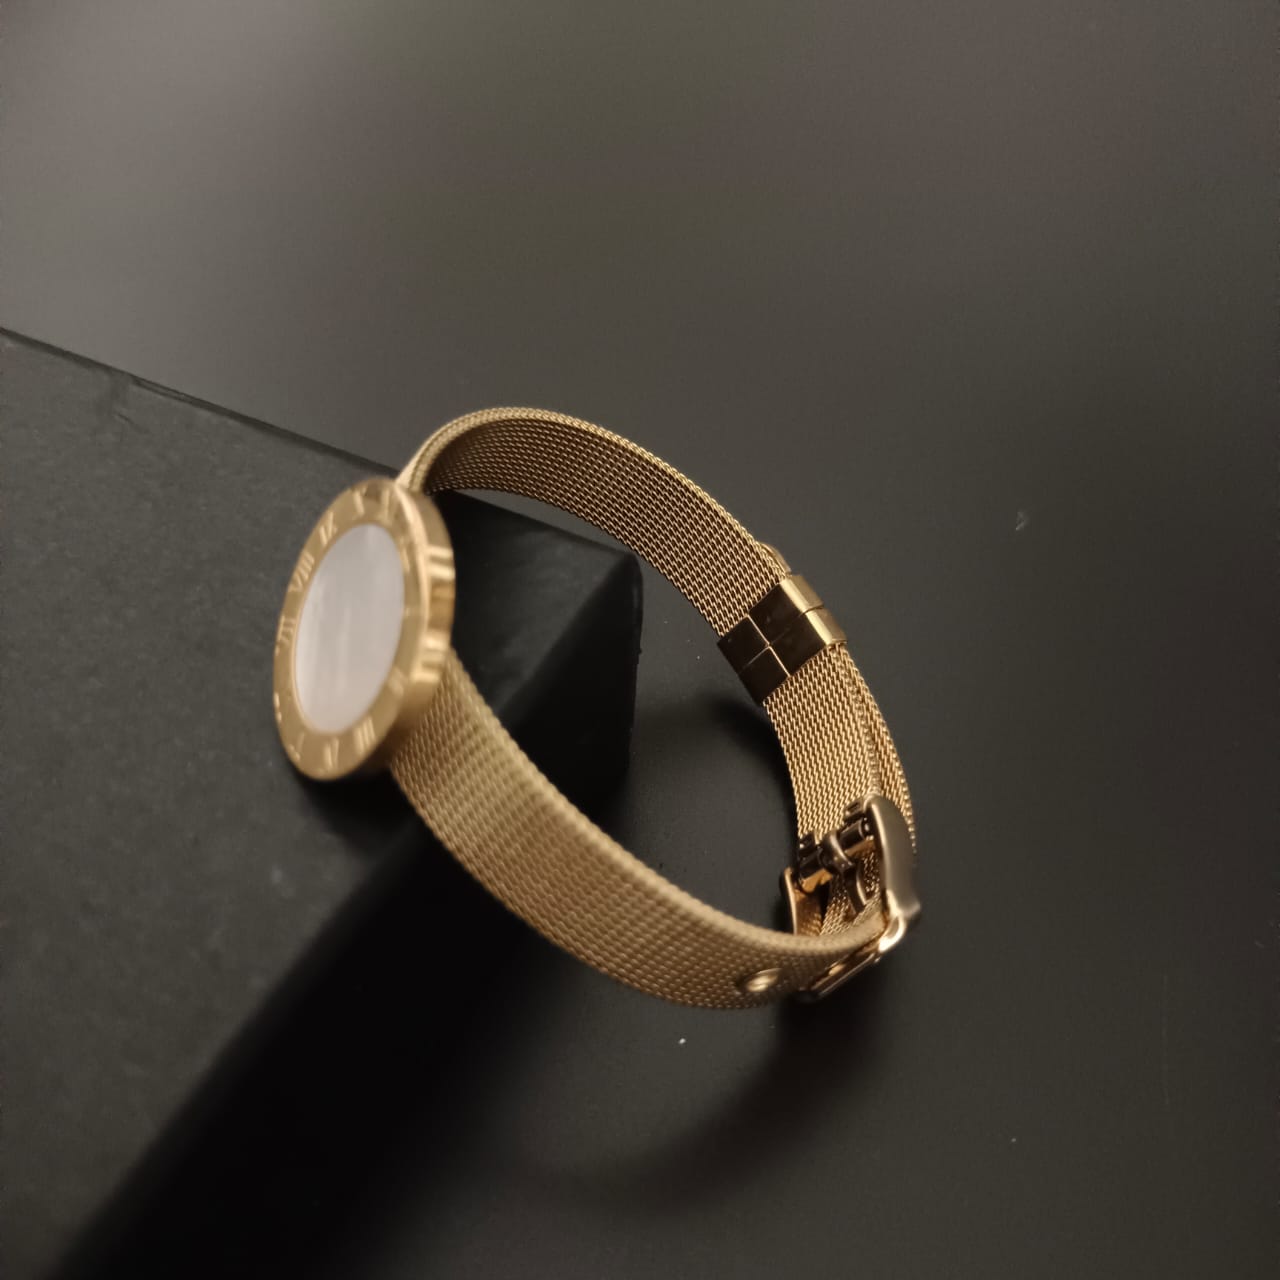 New Golden Watch Design Bracelet For Women and Girl-Jack Marc (White Gold Dial) - JACKMARC.COM